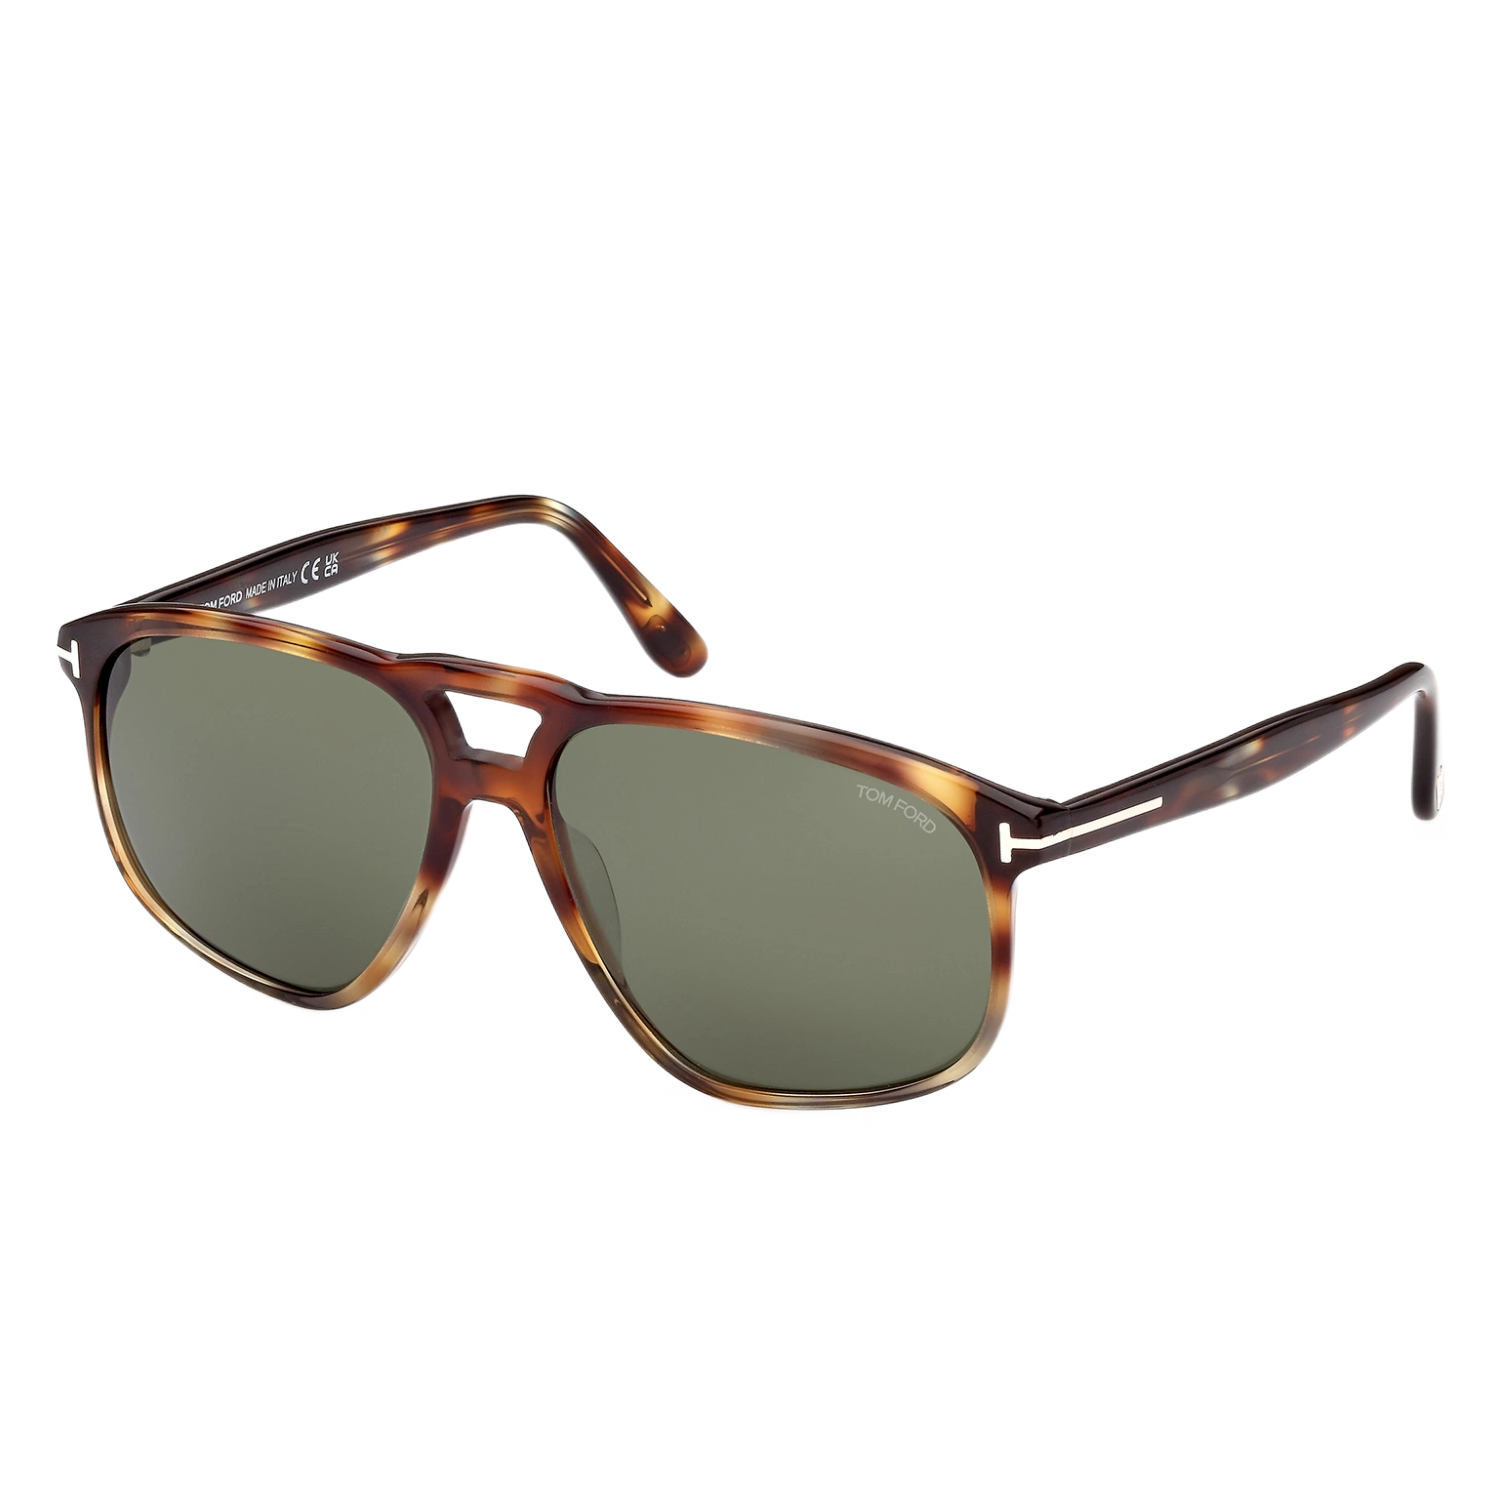 Tom Ford Sunglasses Tom Ford Sunglasses FT1000 56N 58mm Pierre Eyeglasses Eyewear UK USA Australia 